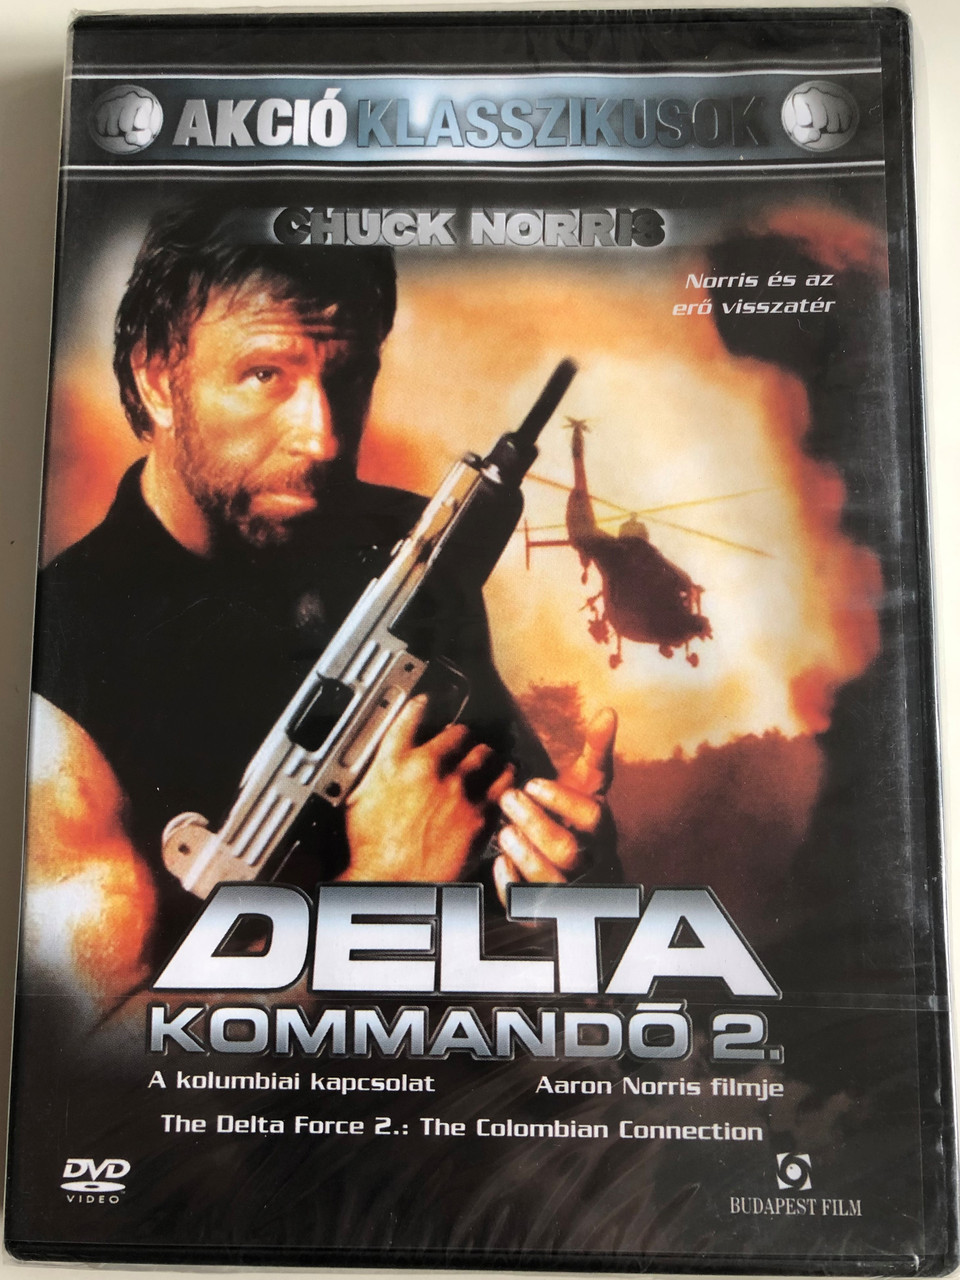 The Delta Force 2: The Colombian Connection DVD 1990 Delta Kommandó 2 - a  kolumbiai kapcsolat / Directed by Aaron Norris / Starring: Chuck Norris,  John P. Ryan, Paul Perri, Billy Drago - Bible in My Language